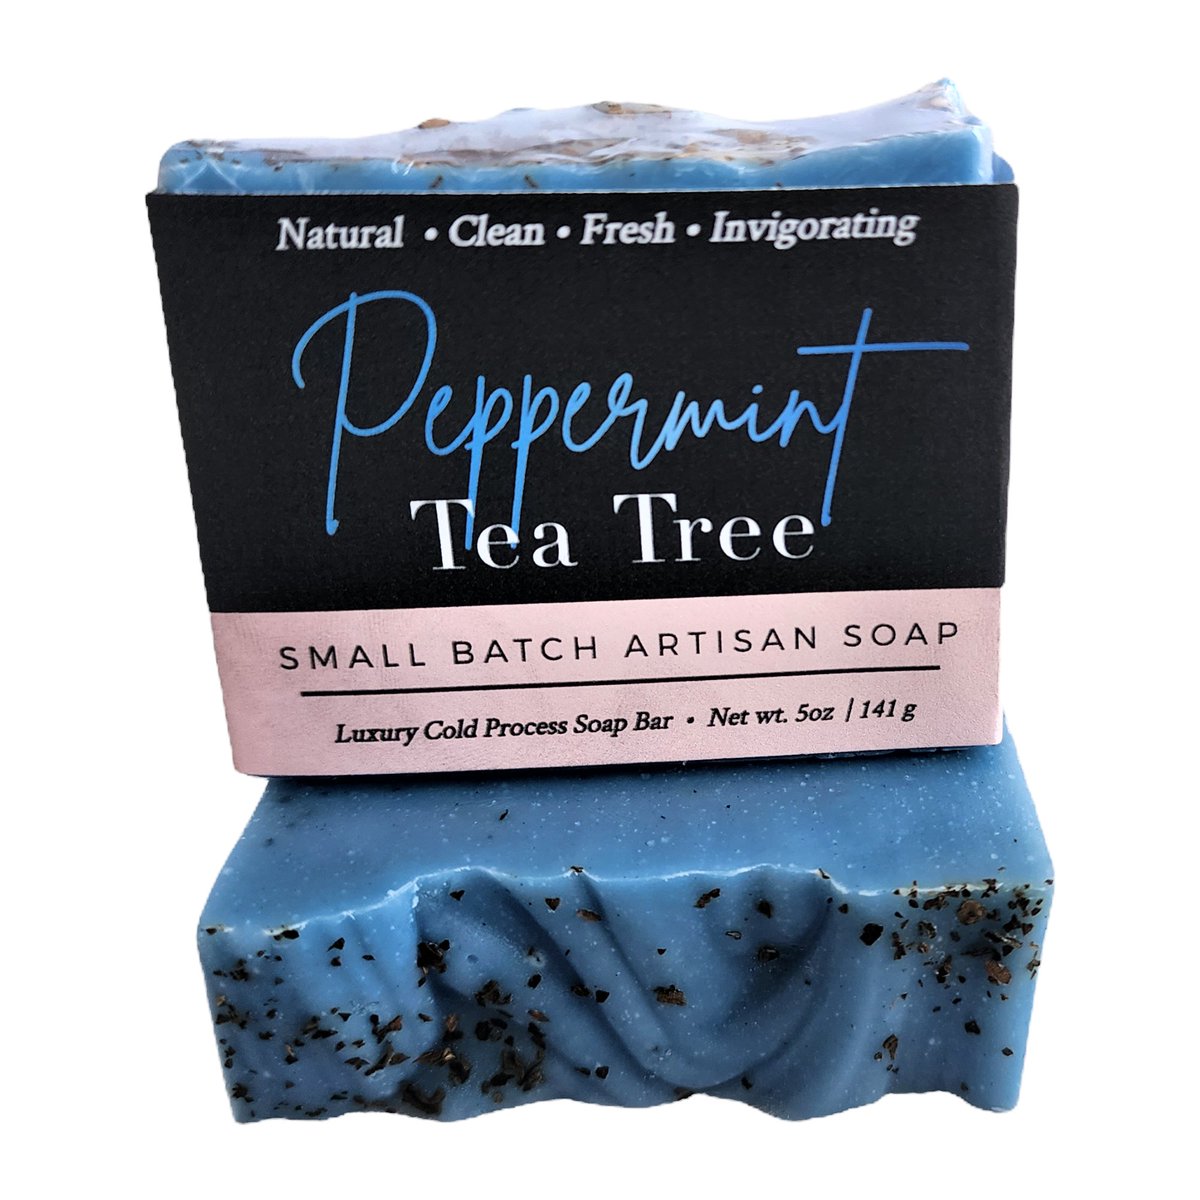 Peppermint Tea Tree Soap tuppu.net/36998f3b #handmade #womanowned #DeShawnMarie #handmadesoap #smallbusiness